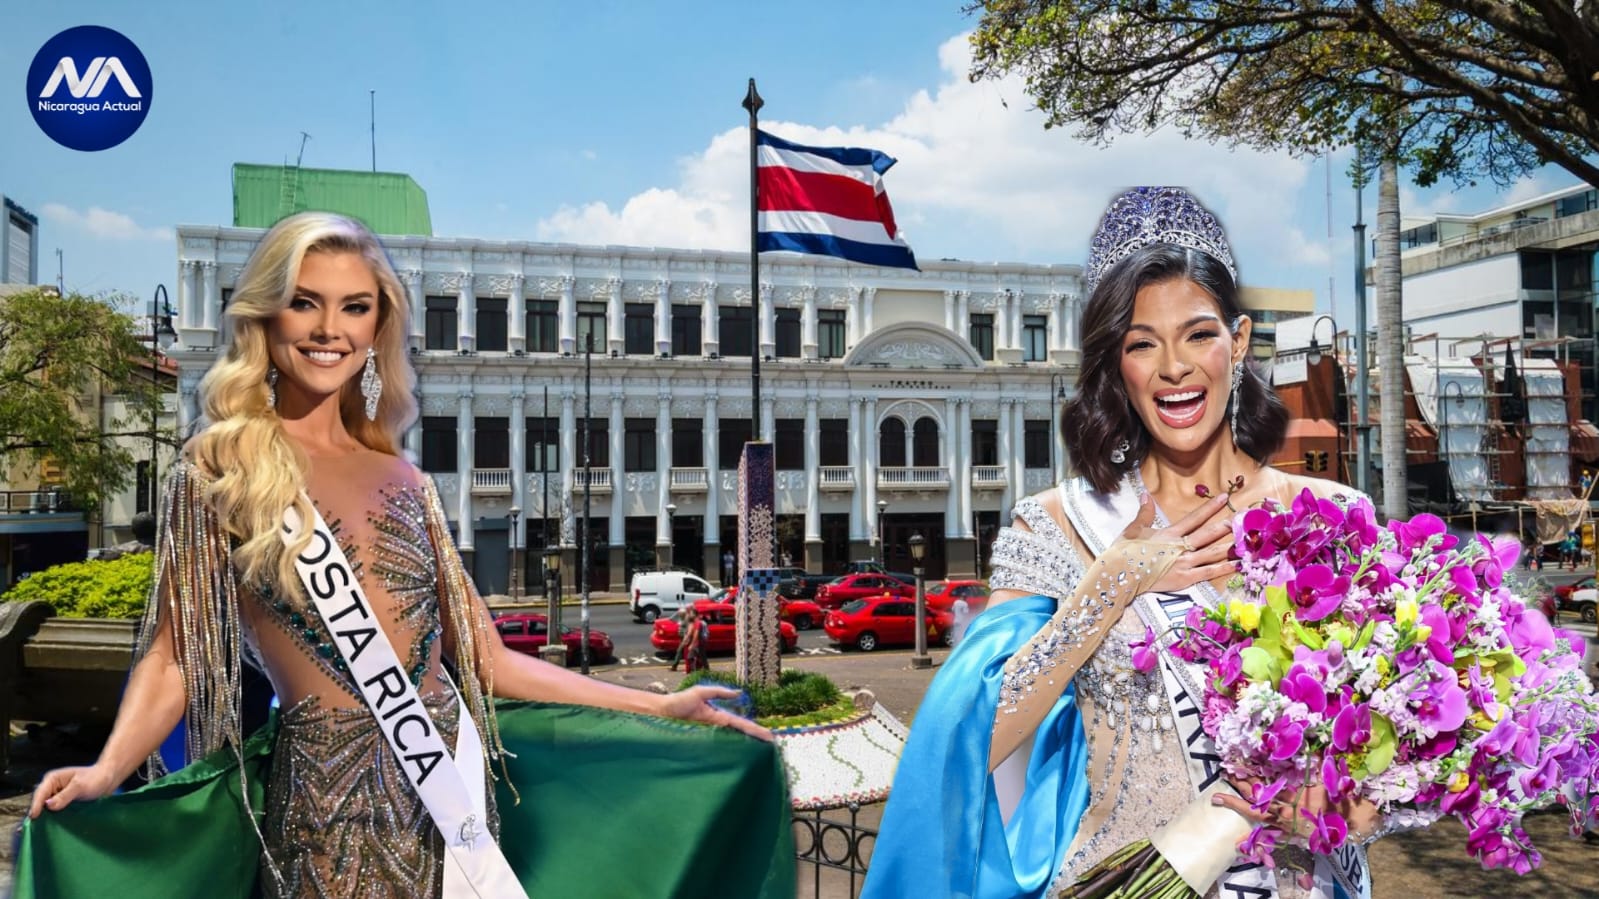 Miss Costa Rica invita a Sheynnis palacios a su país “pura vida”